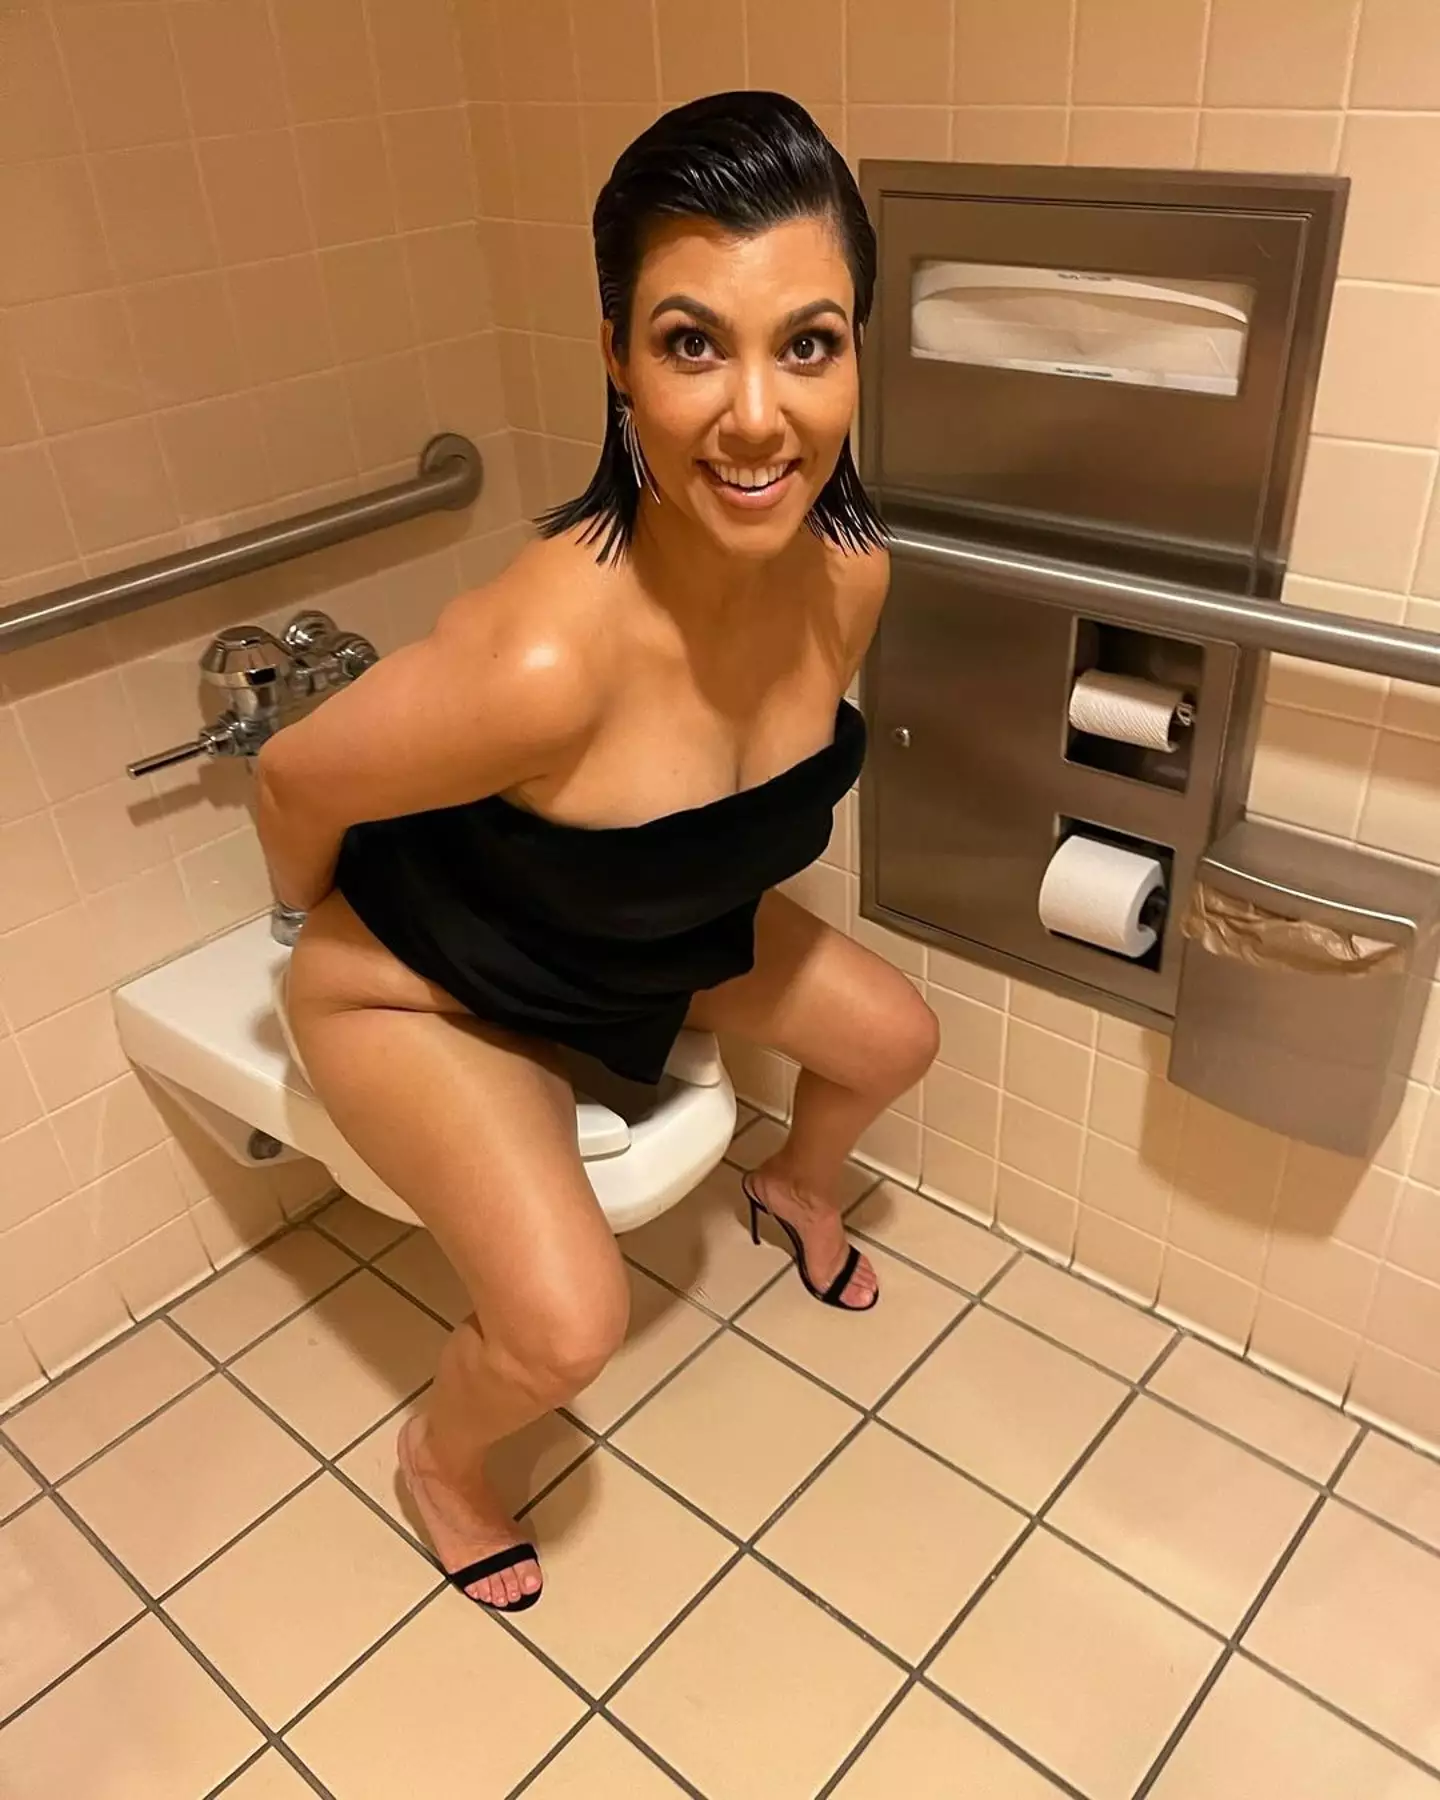 The final post on Travis' photo dump showed Kourtney on the toilet. (Instagram/@travisbarker)